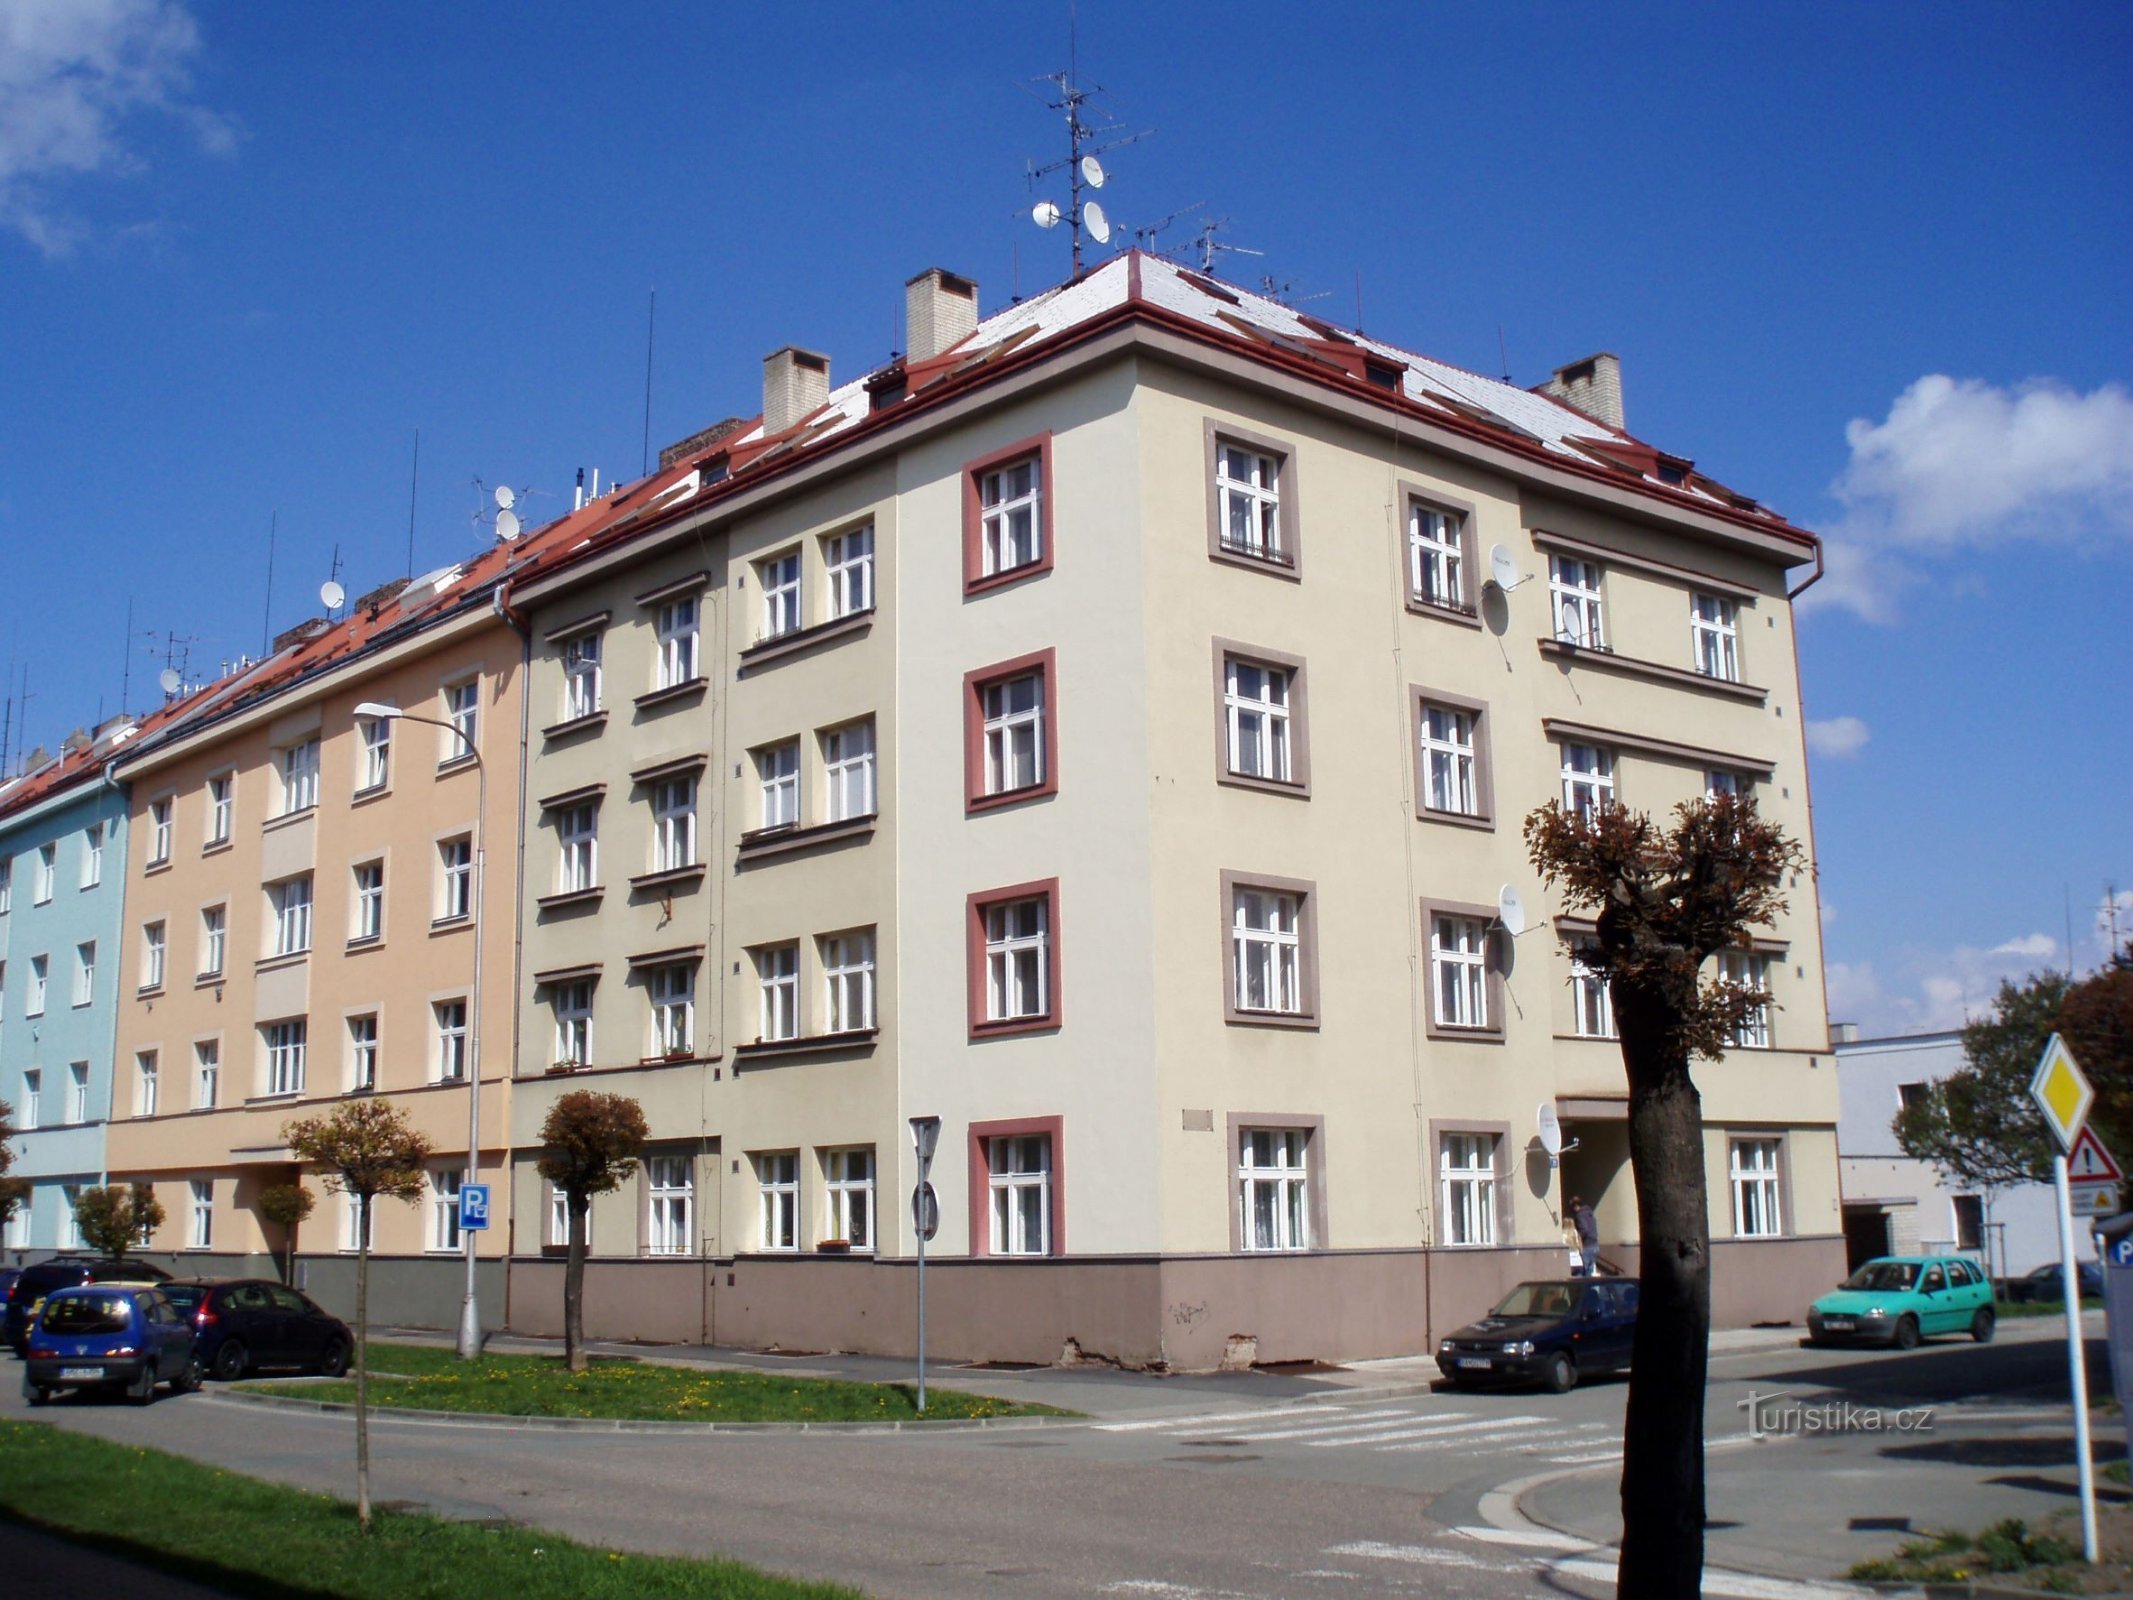 Albertova No. 826 (Hradec Králové, April 21.4.2012, XNUMX)